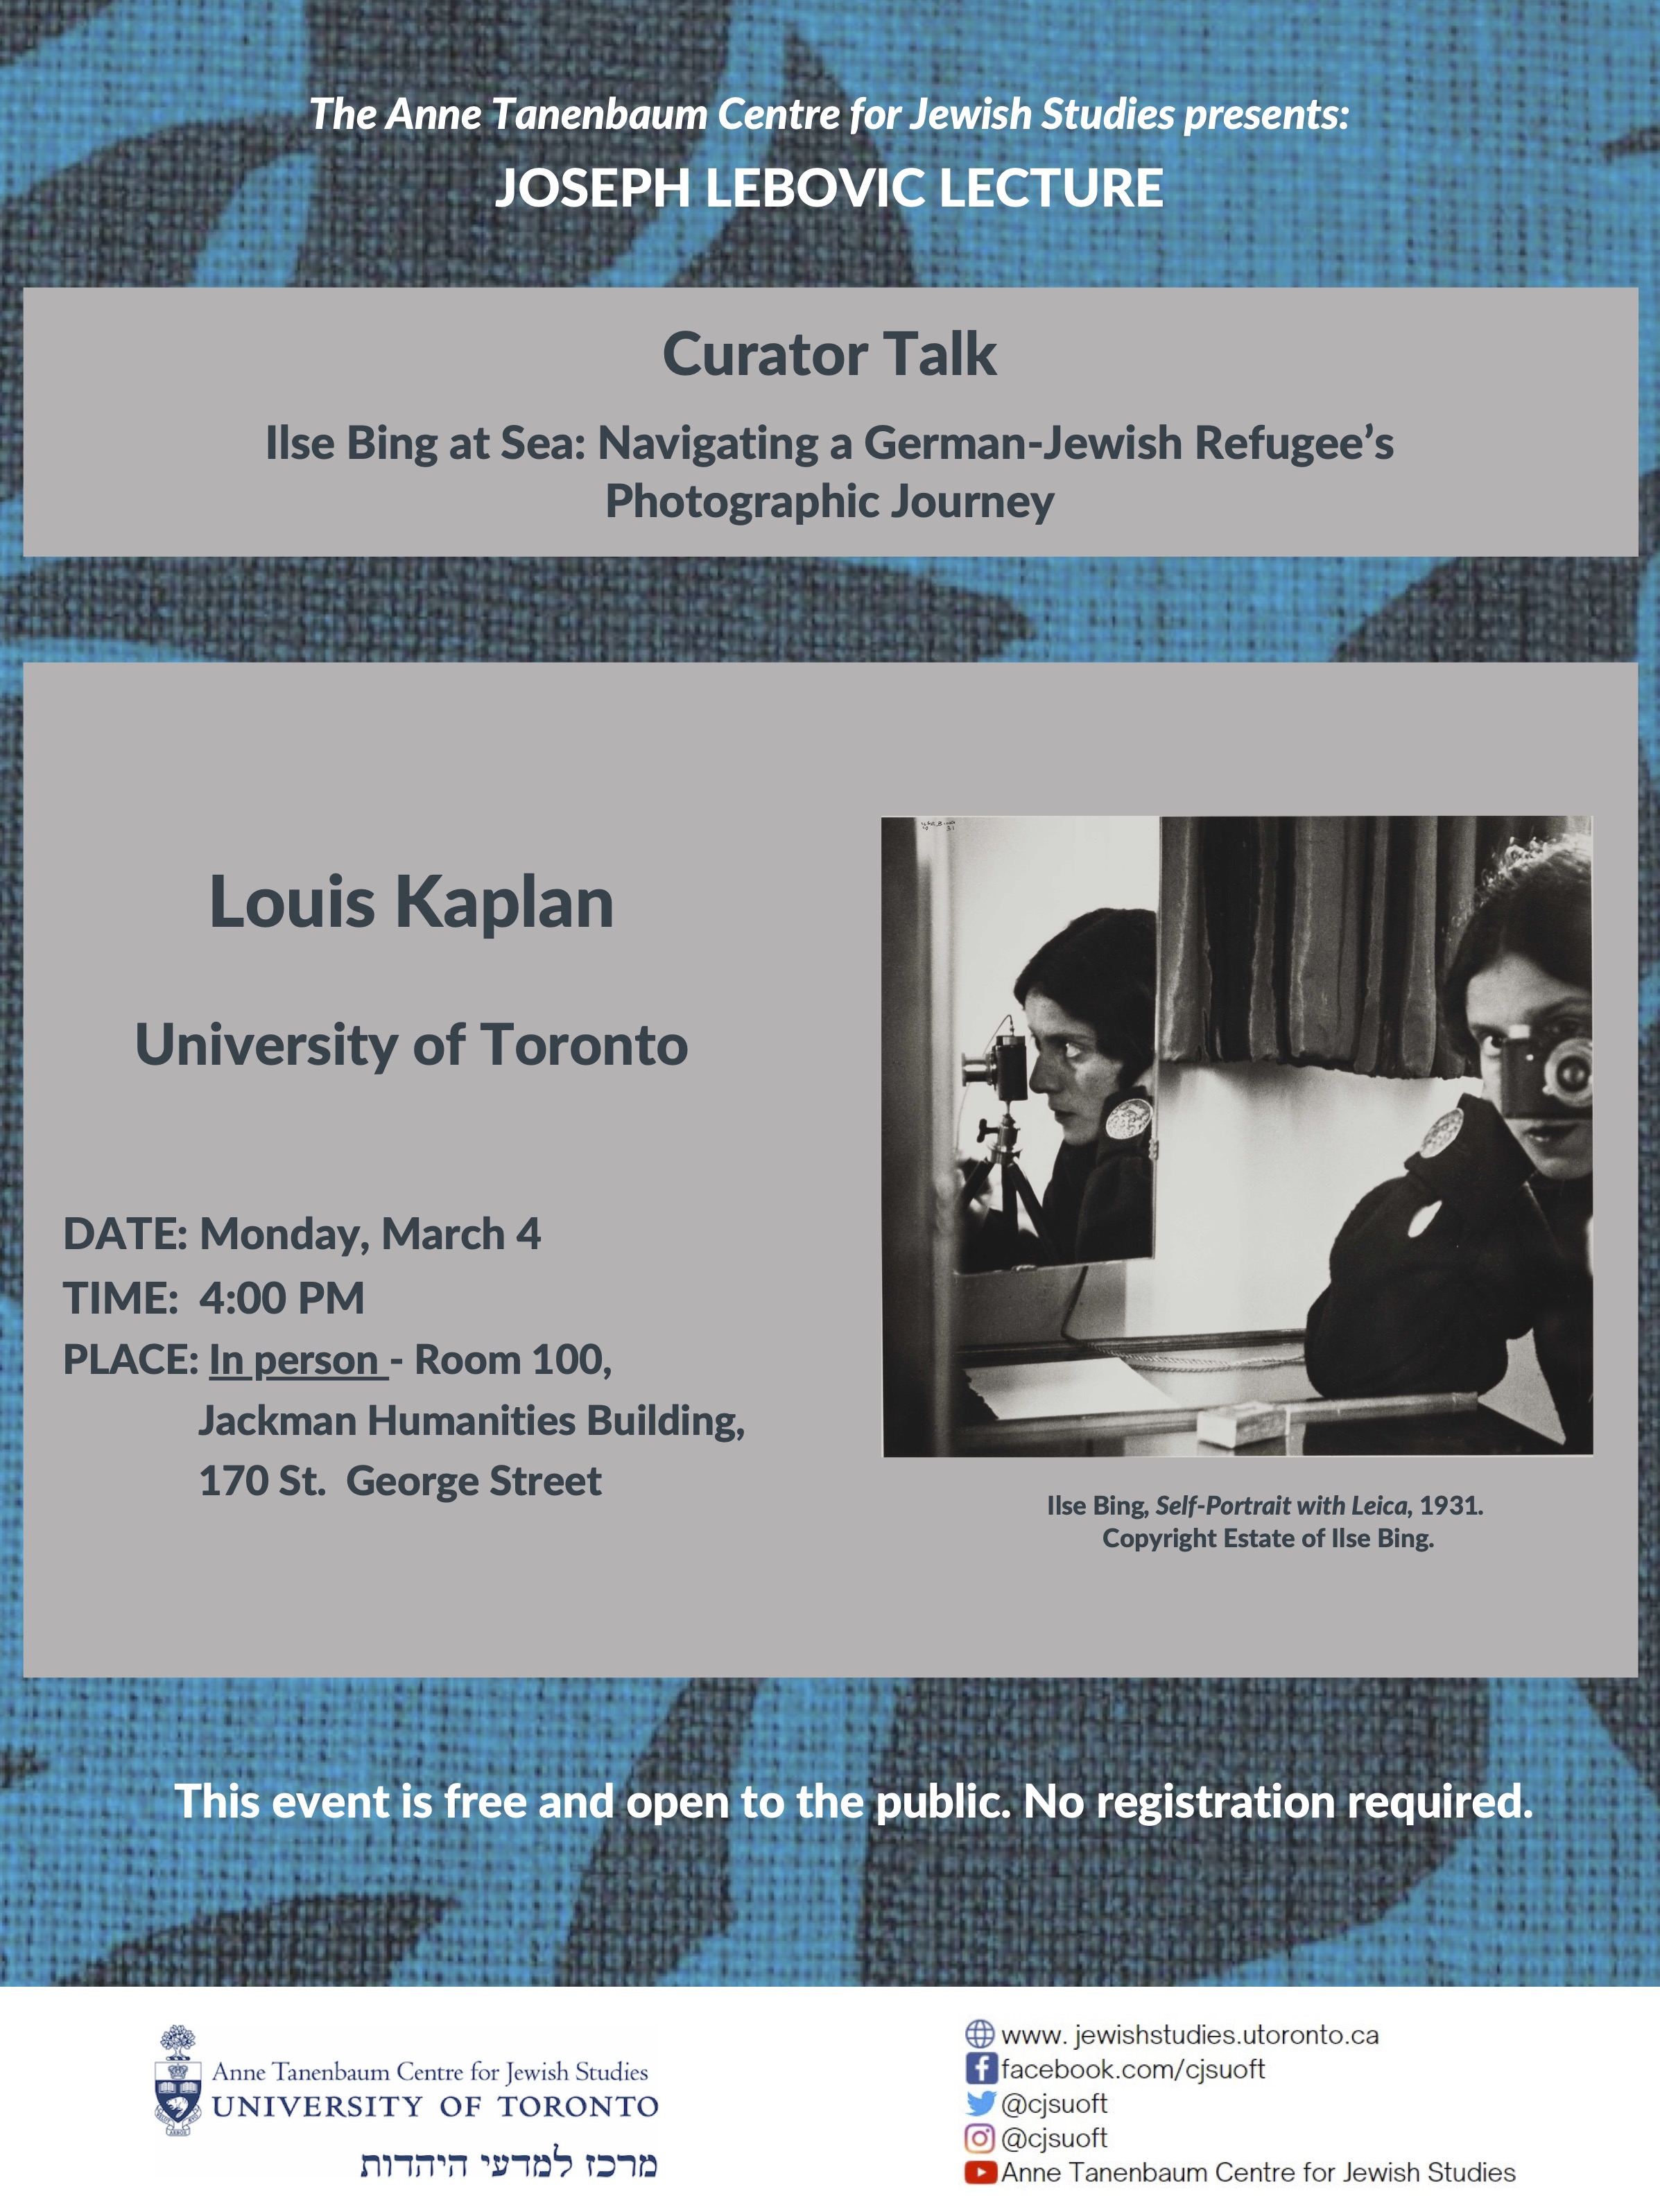 Joseph Lebovic Lecture Poster featuring Louis Kaplan